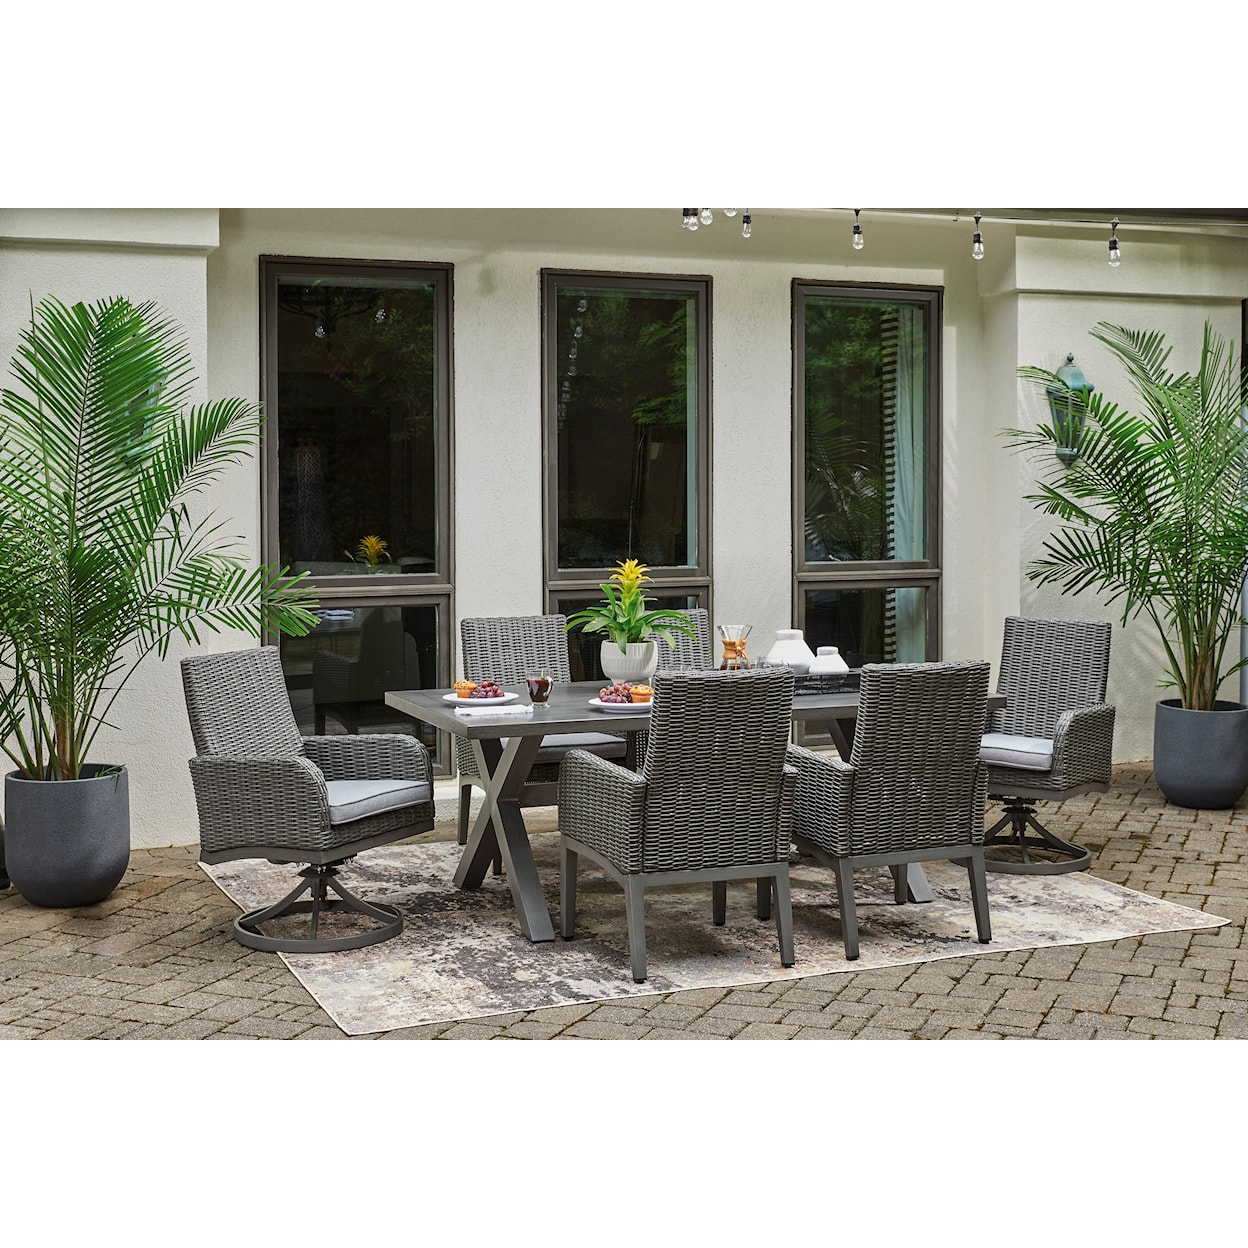 Ashley Furniture Signature Design Elite Park Outdoor Dining Table